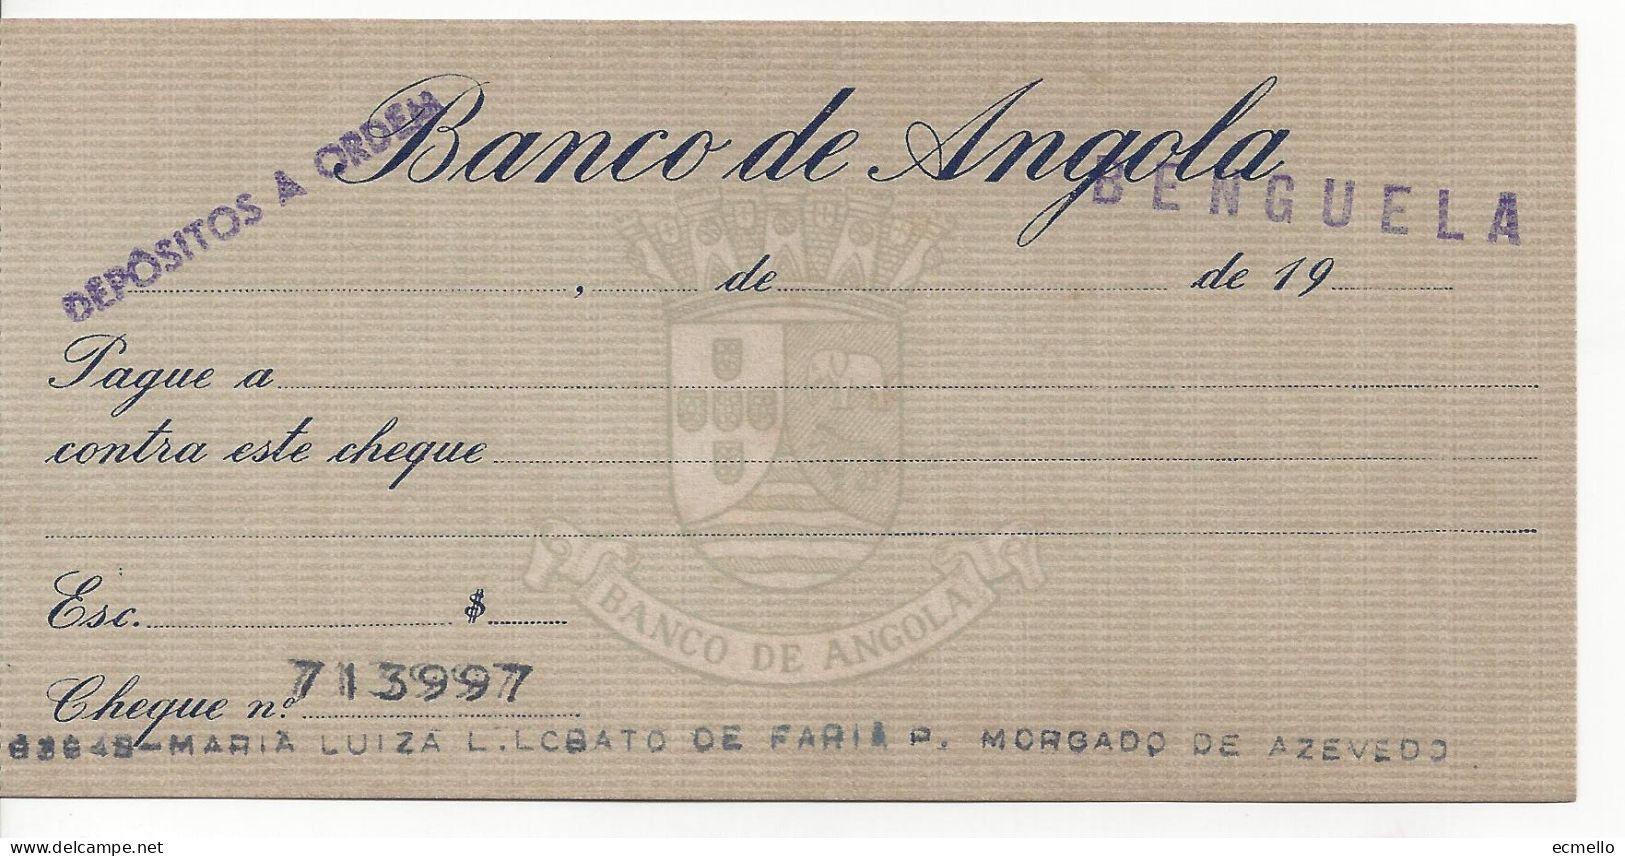 PORTUGAL ANGOLA CHEQUE CHECK BANCO DE ANGOLA, BENGUELA, 1950'S SCARCE - Cheques & Traverler's Cheques